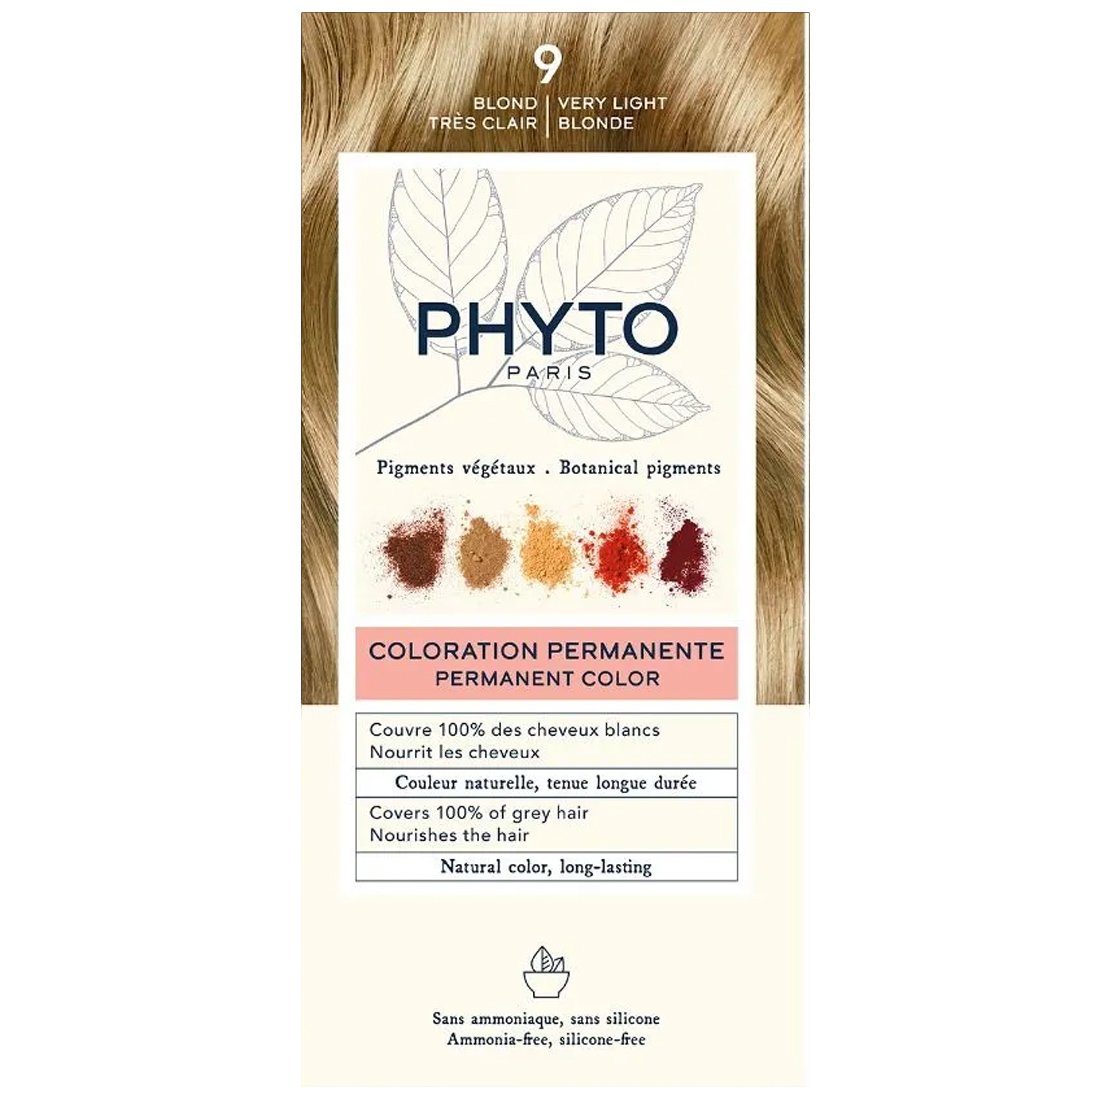 Phyto Permanent Hair Color Kit Μόνιμη Βαφή Μαλλιών με Φυτικές Χρωστικές, Χωρίς Αμμωνία 1 Τεμάχιο – 9 Ξανθό Πολύ Ανοιχτό